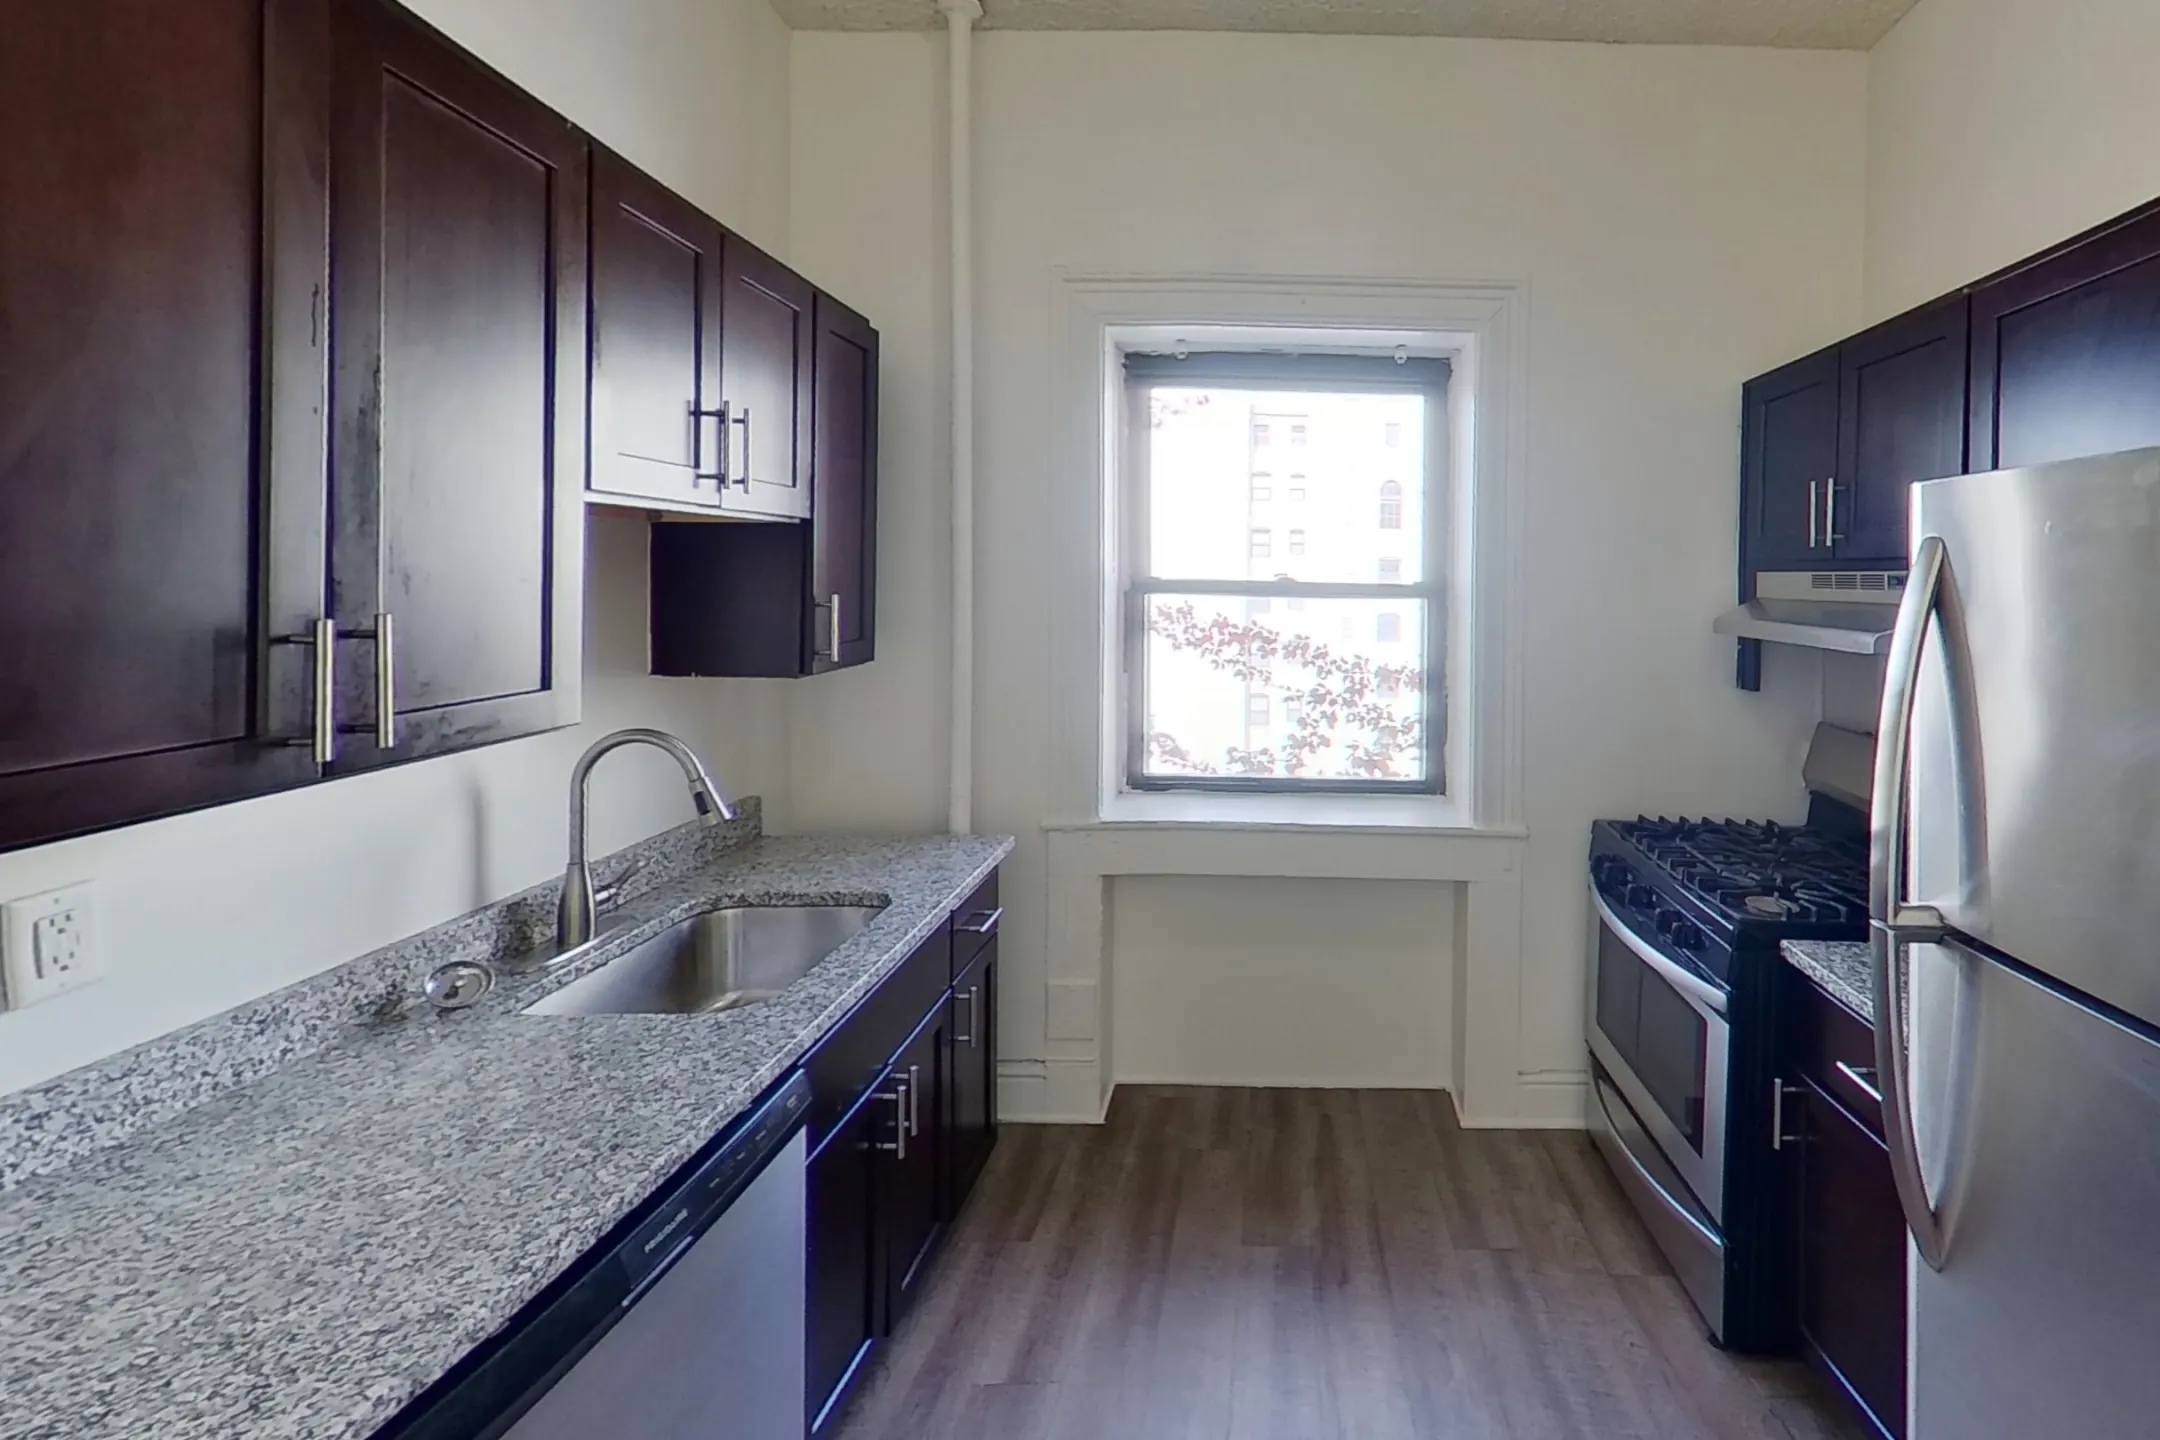 Kitchen - Mount Vernon Apartments - Baltimore, MD